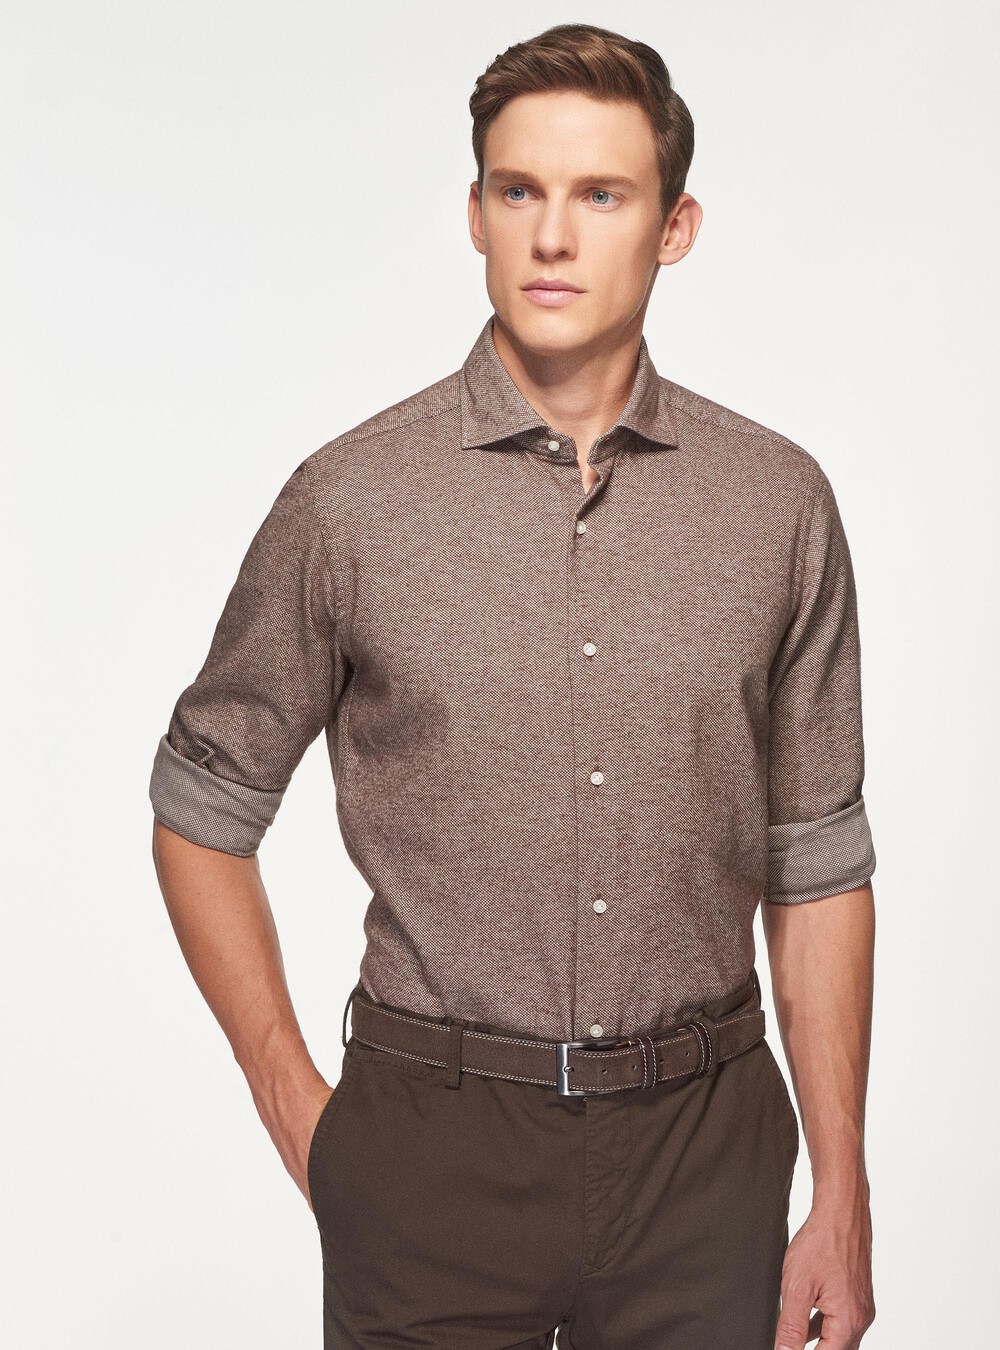 Men's Shirts on Sale Online | Gutteridge | Men's Clothing Sale